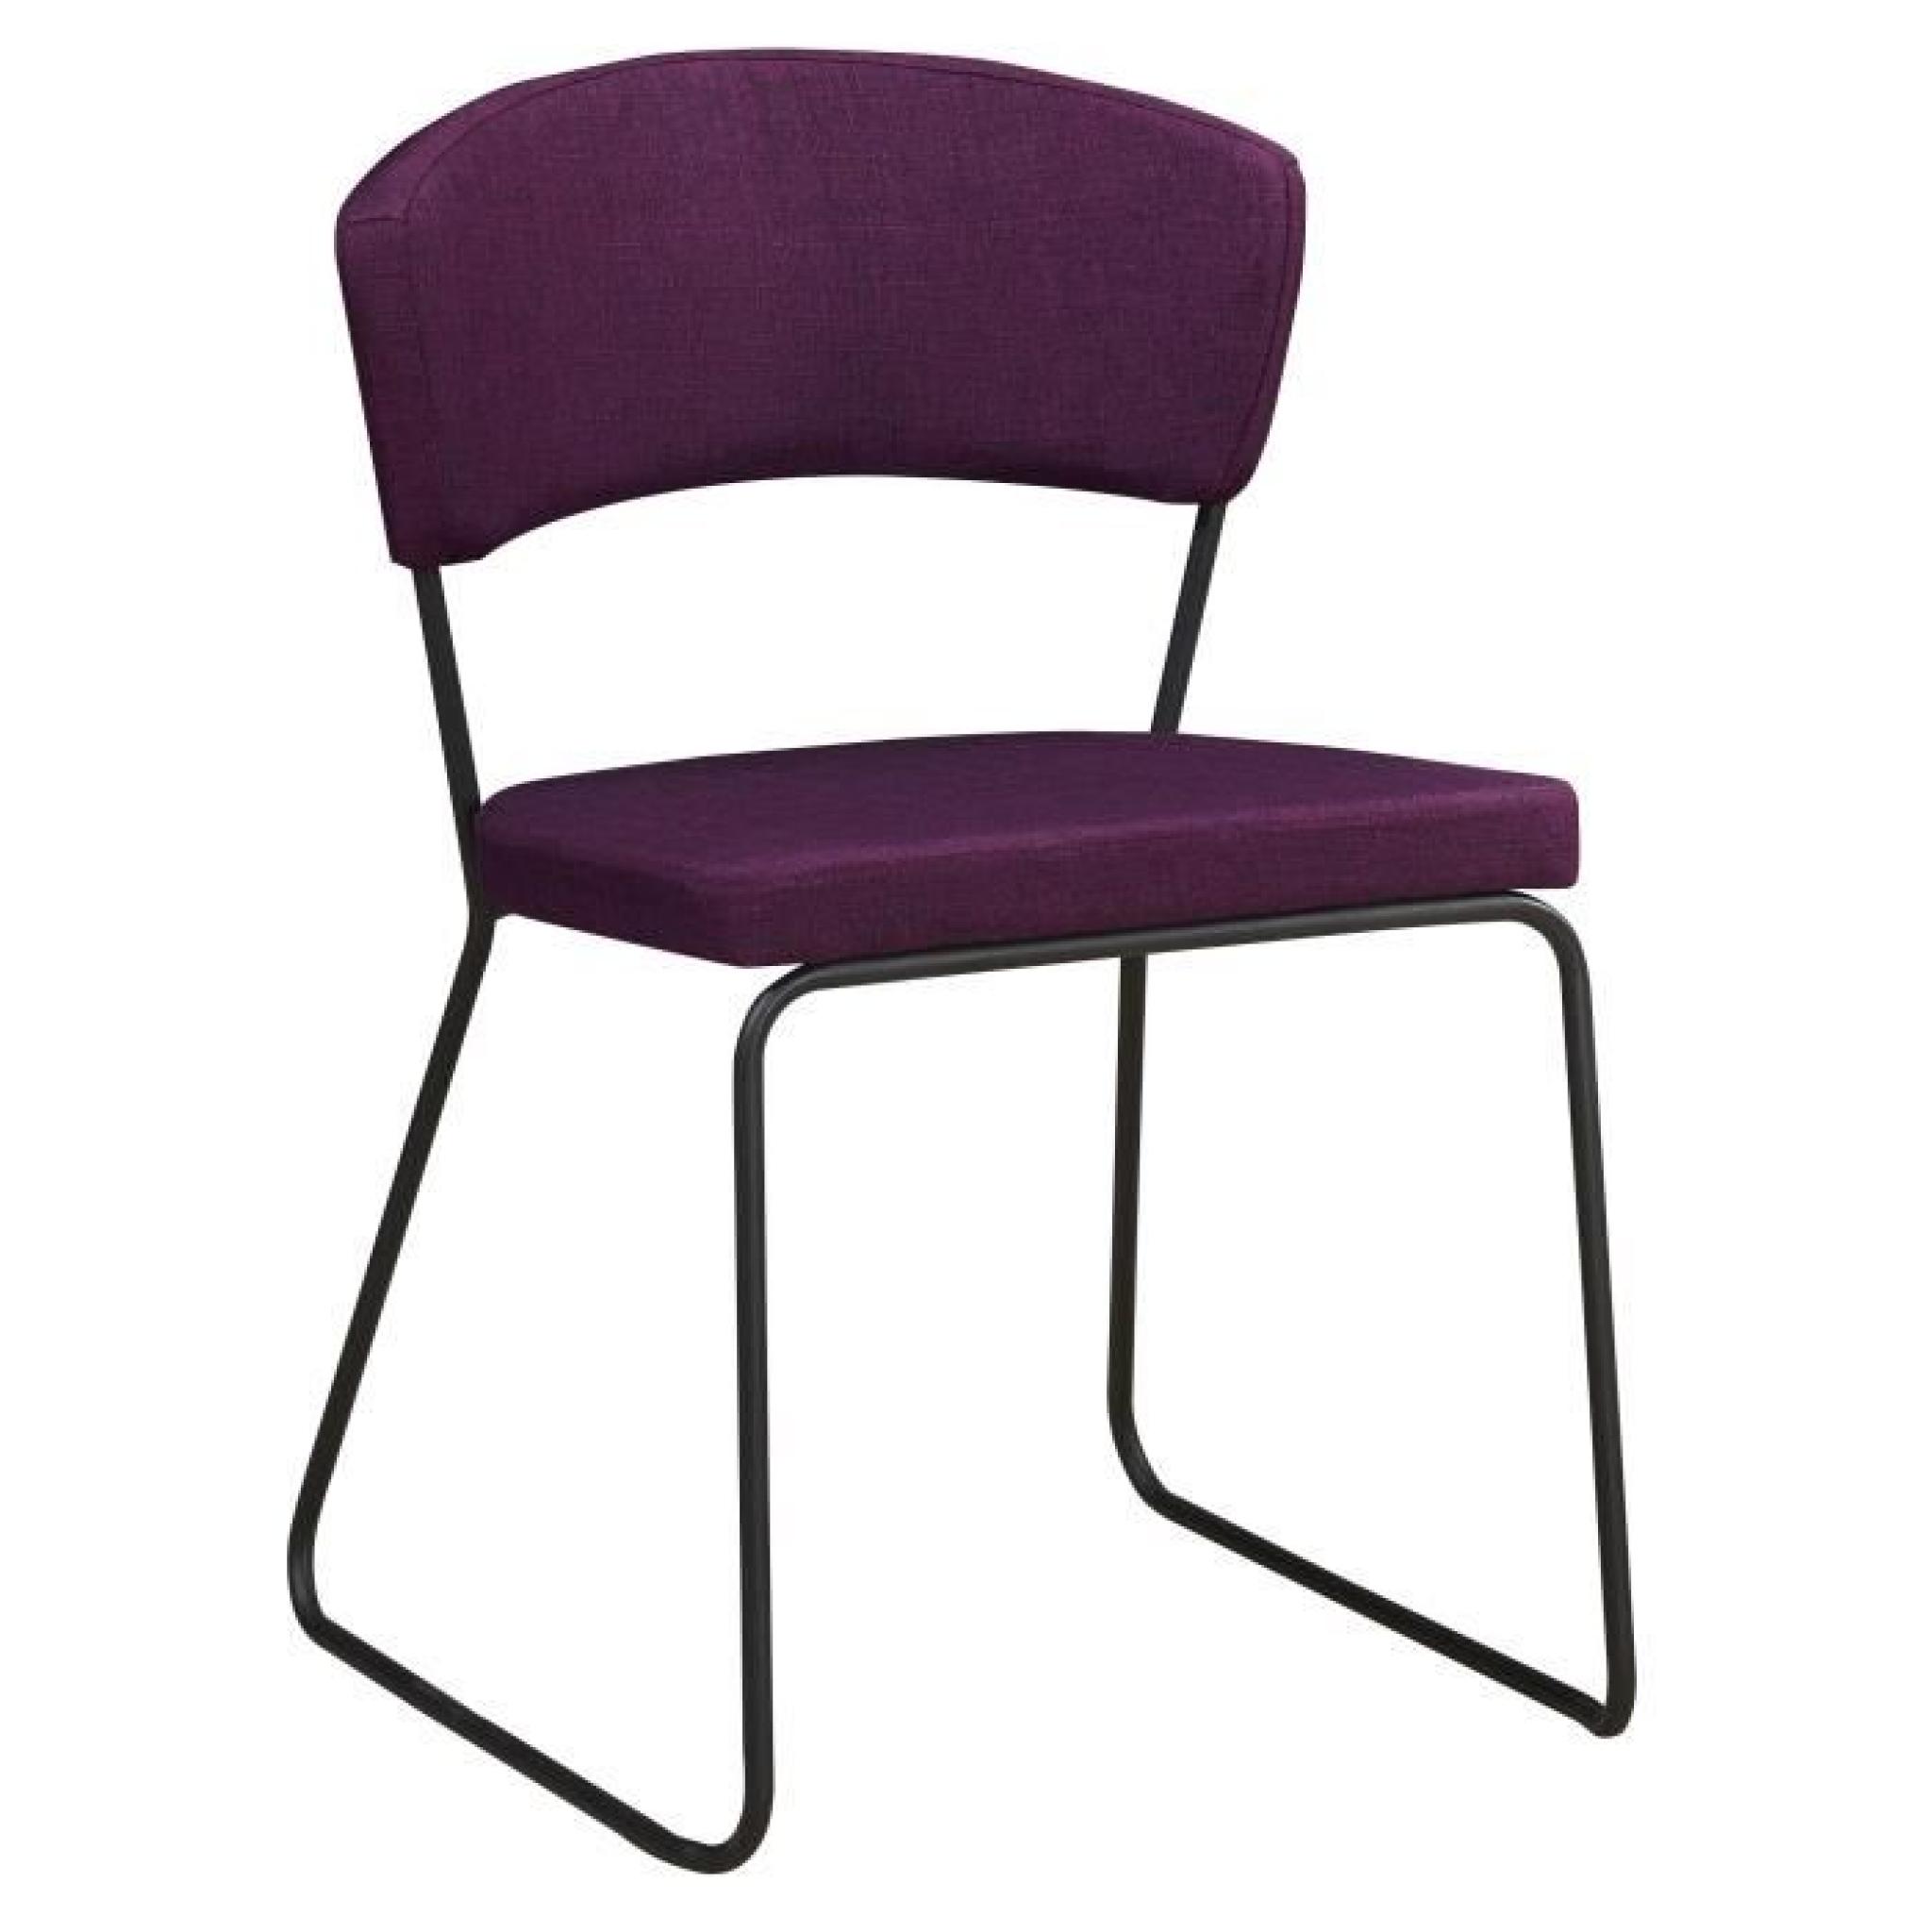 Chaise design minimaliste en tissus coloris prune